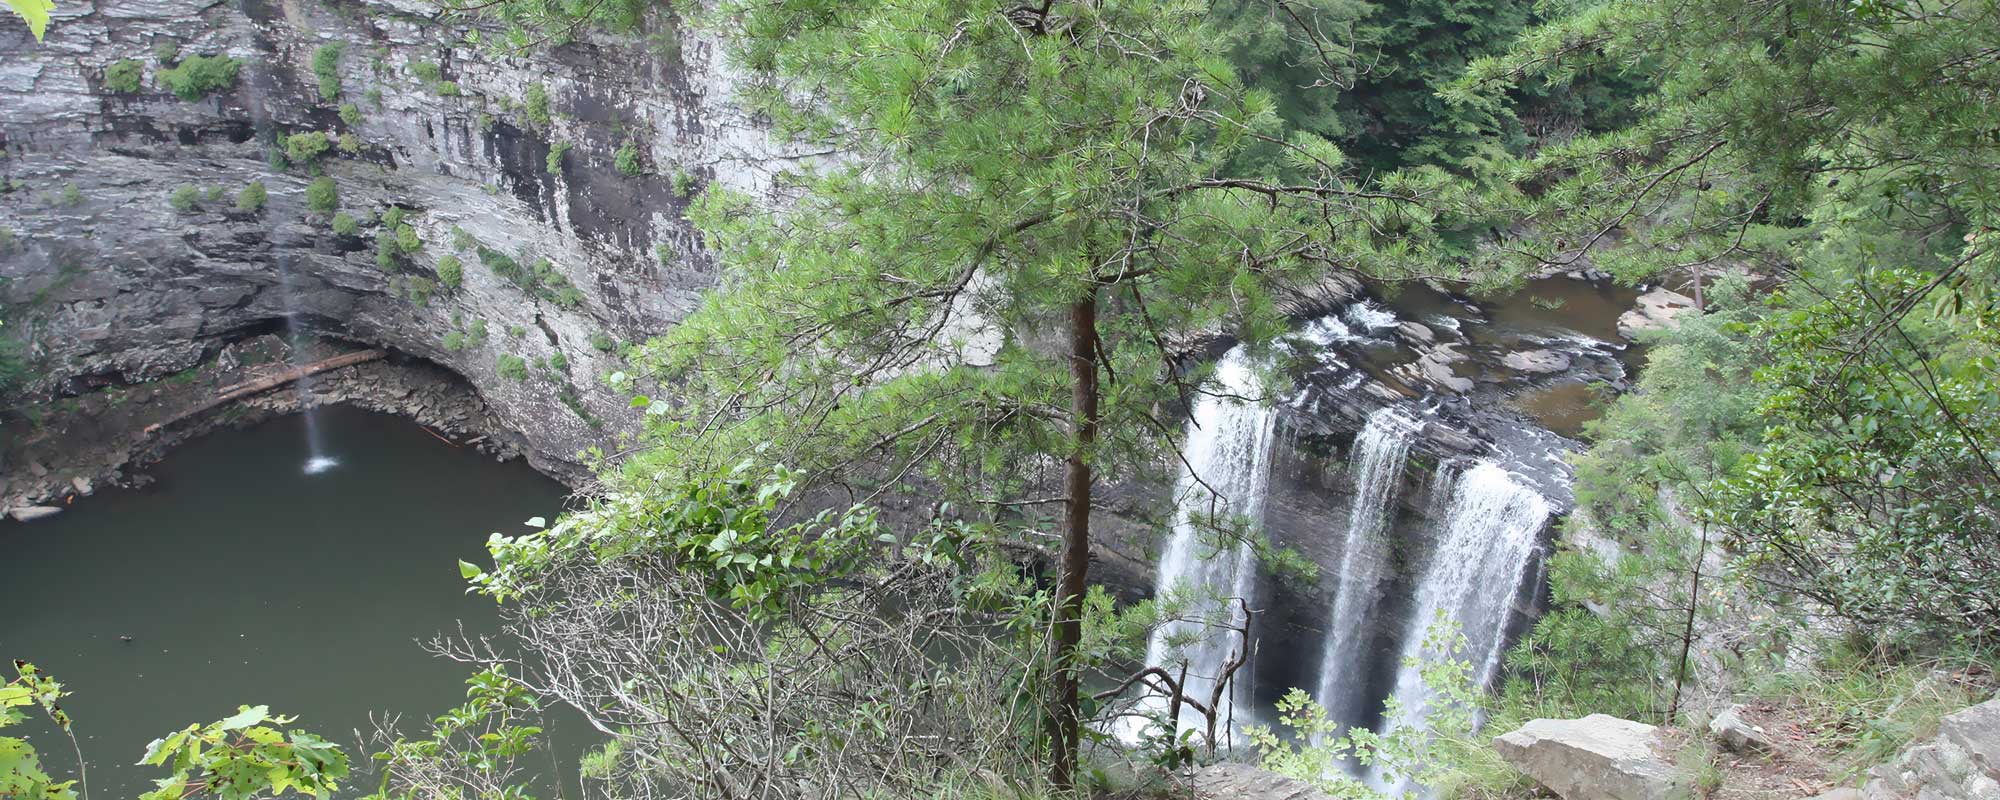 Fall Creek Falls via Gorge Overlook Trail